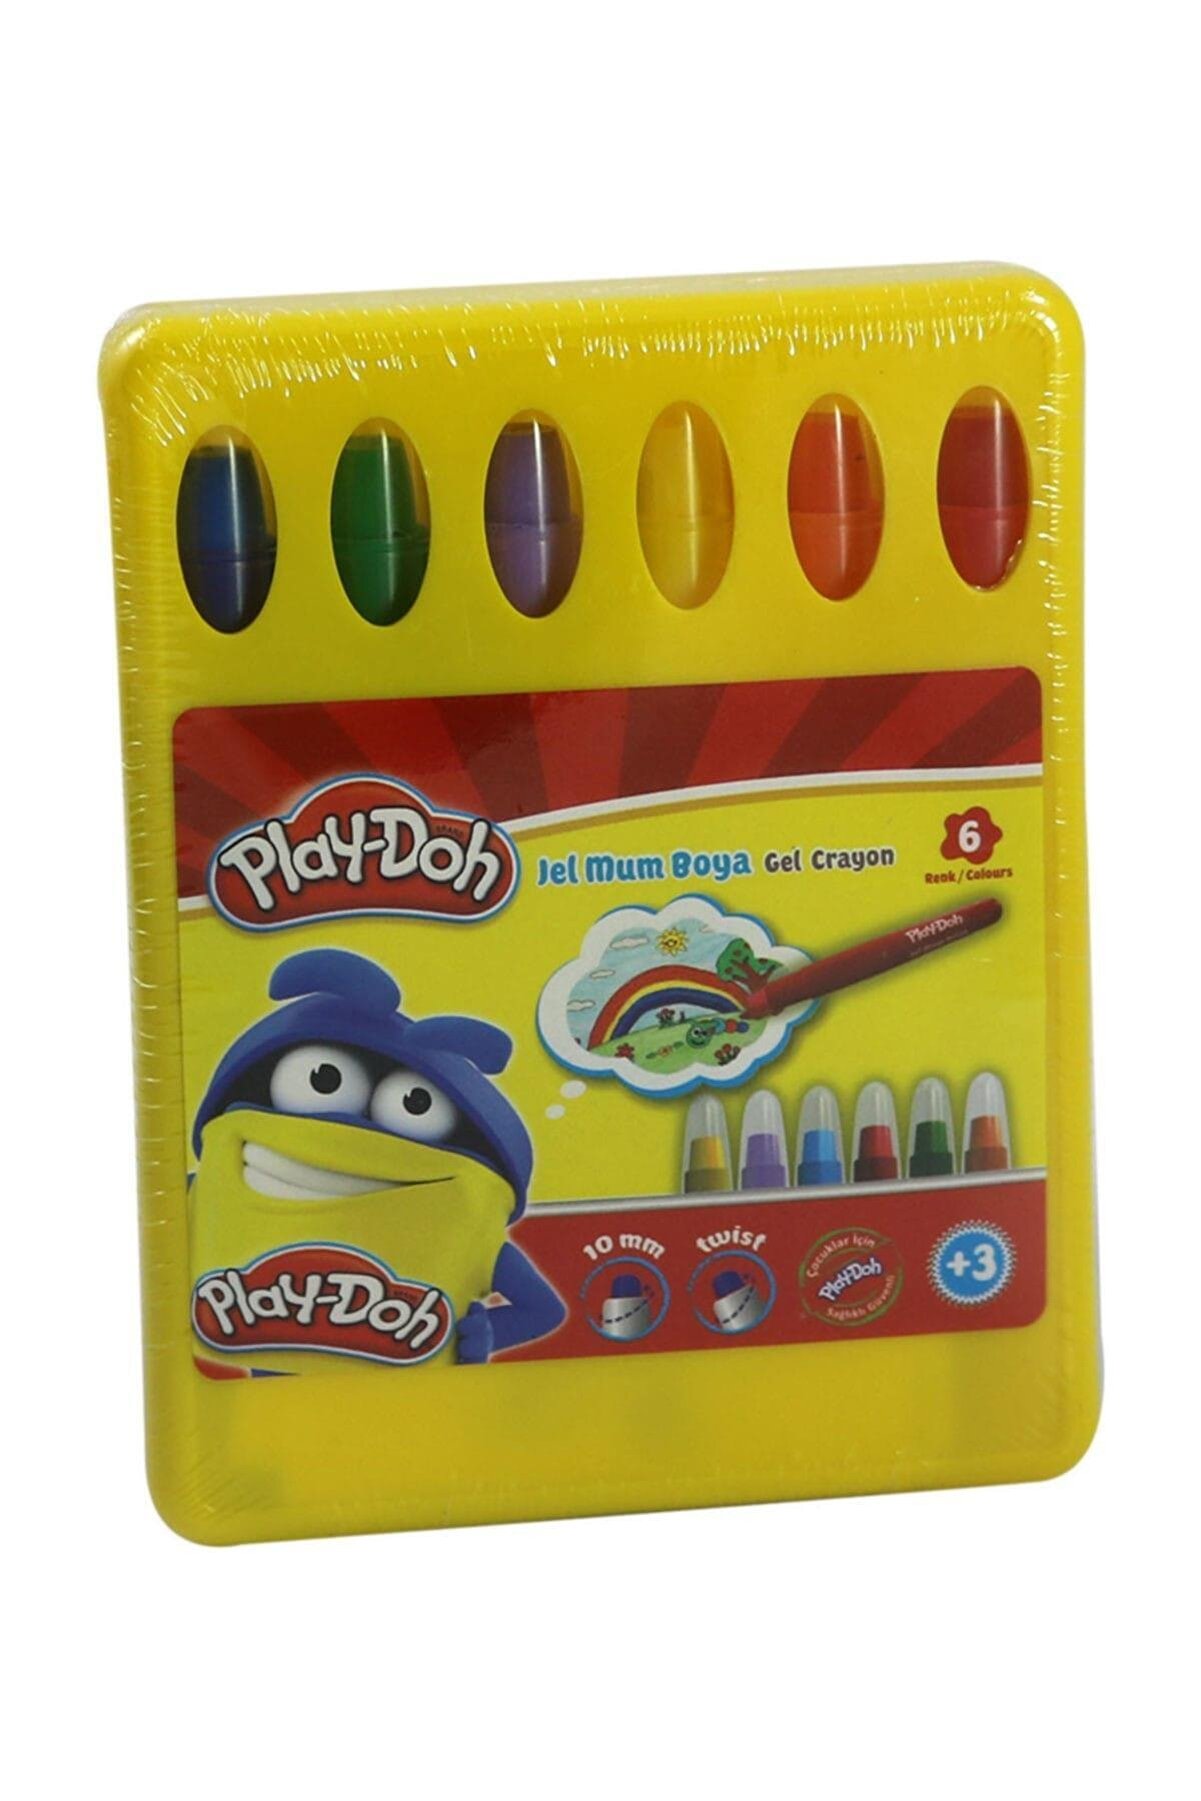 Play Doh Play-Doh Gel Crayon Jel Mum Boya 6 Renk PP Kutu